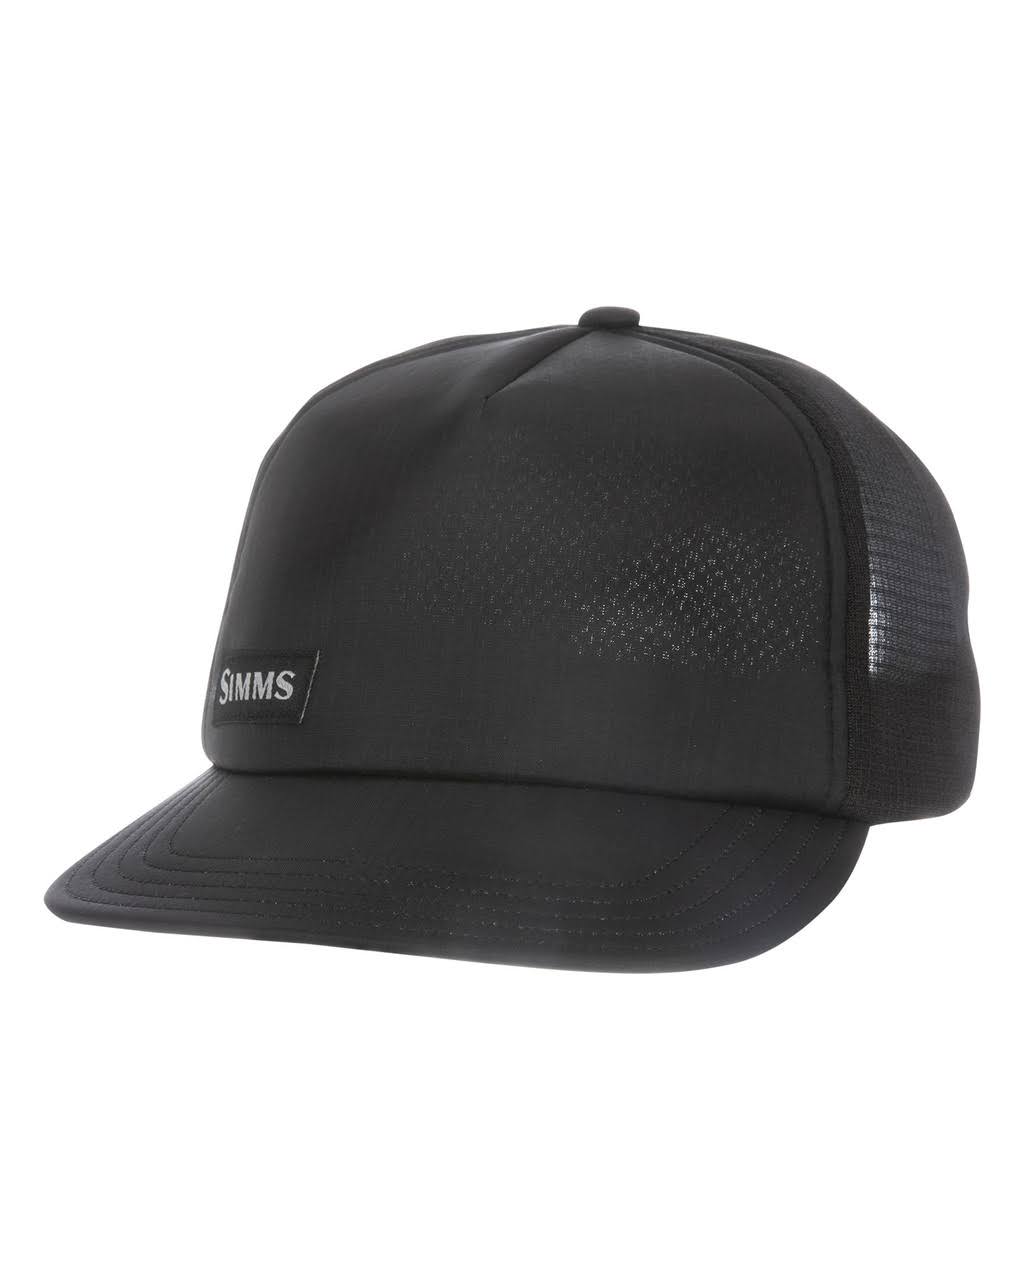 Simms Trucker Hat - Black